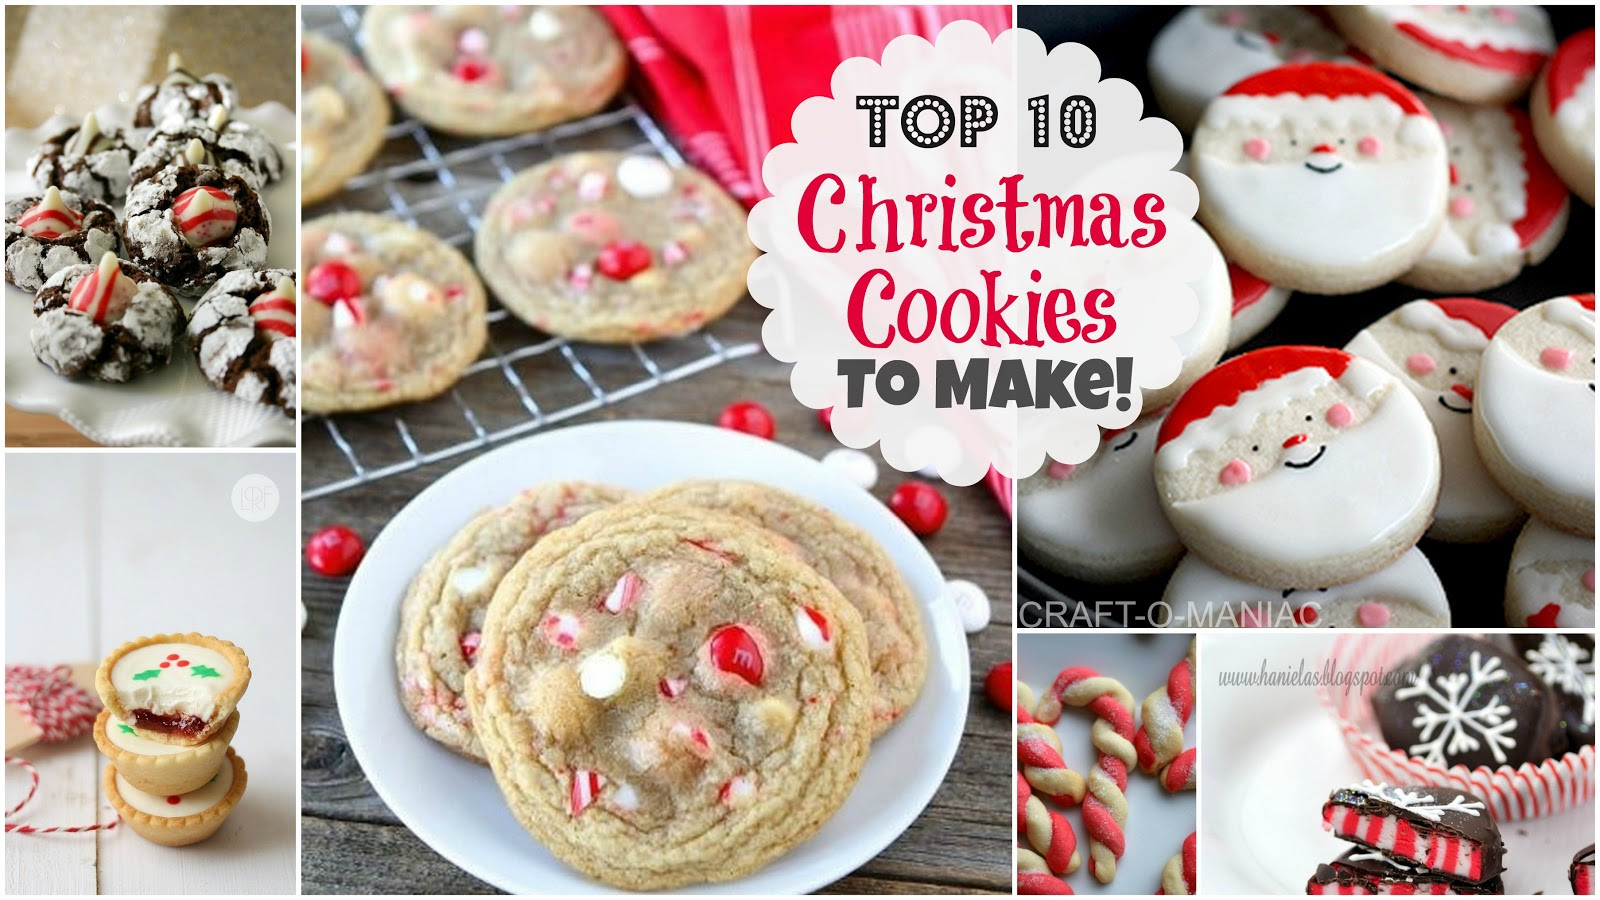 Great Christmas Cookies
 Top 10 Christmas Cookies to Make Craft O Maniac